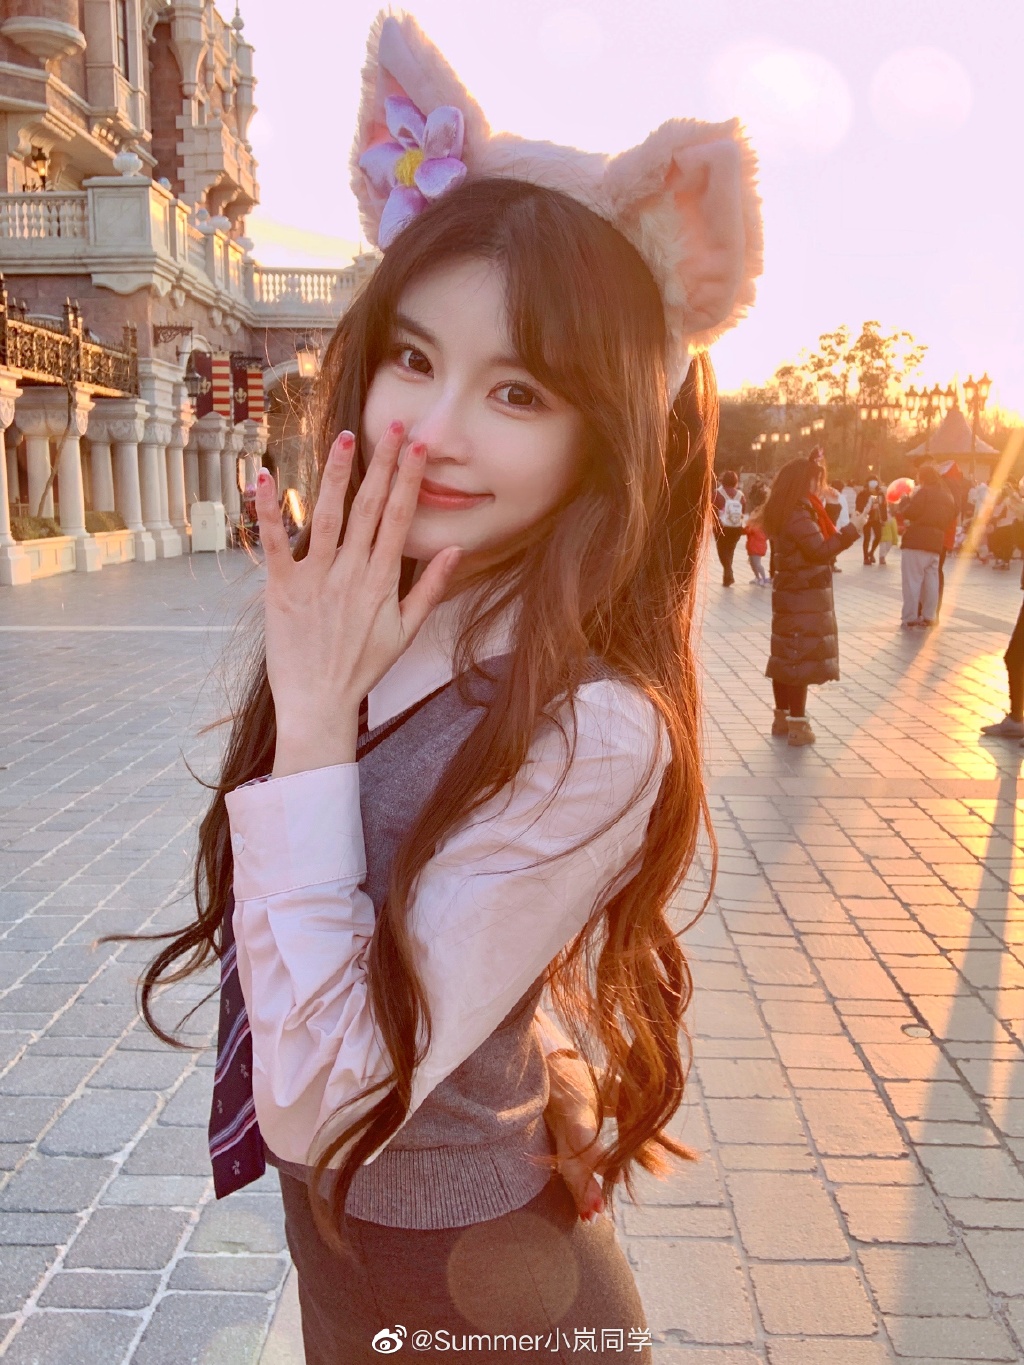 Summer小岚同学 在迪士尼过年太幸福啦 上海·上海迪士尼乐园 ​​​​